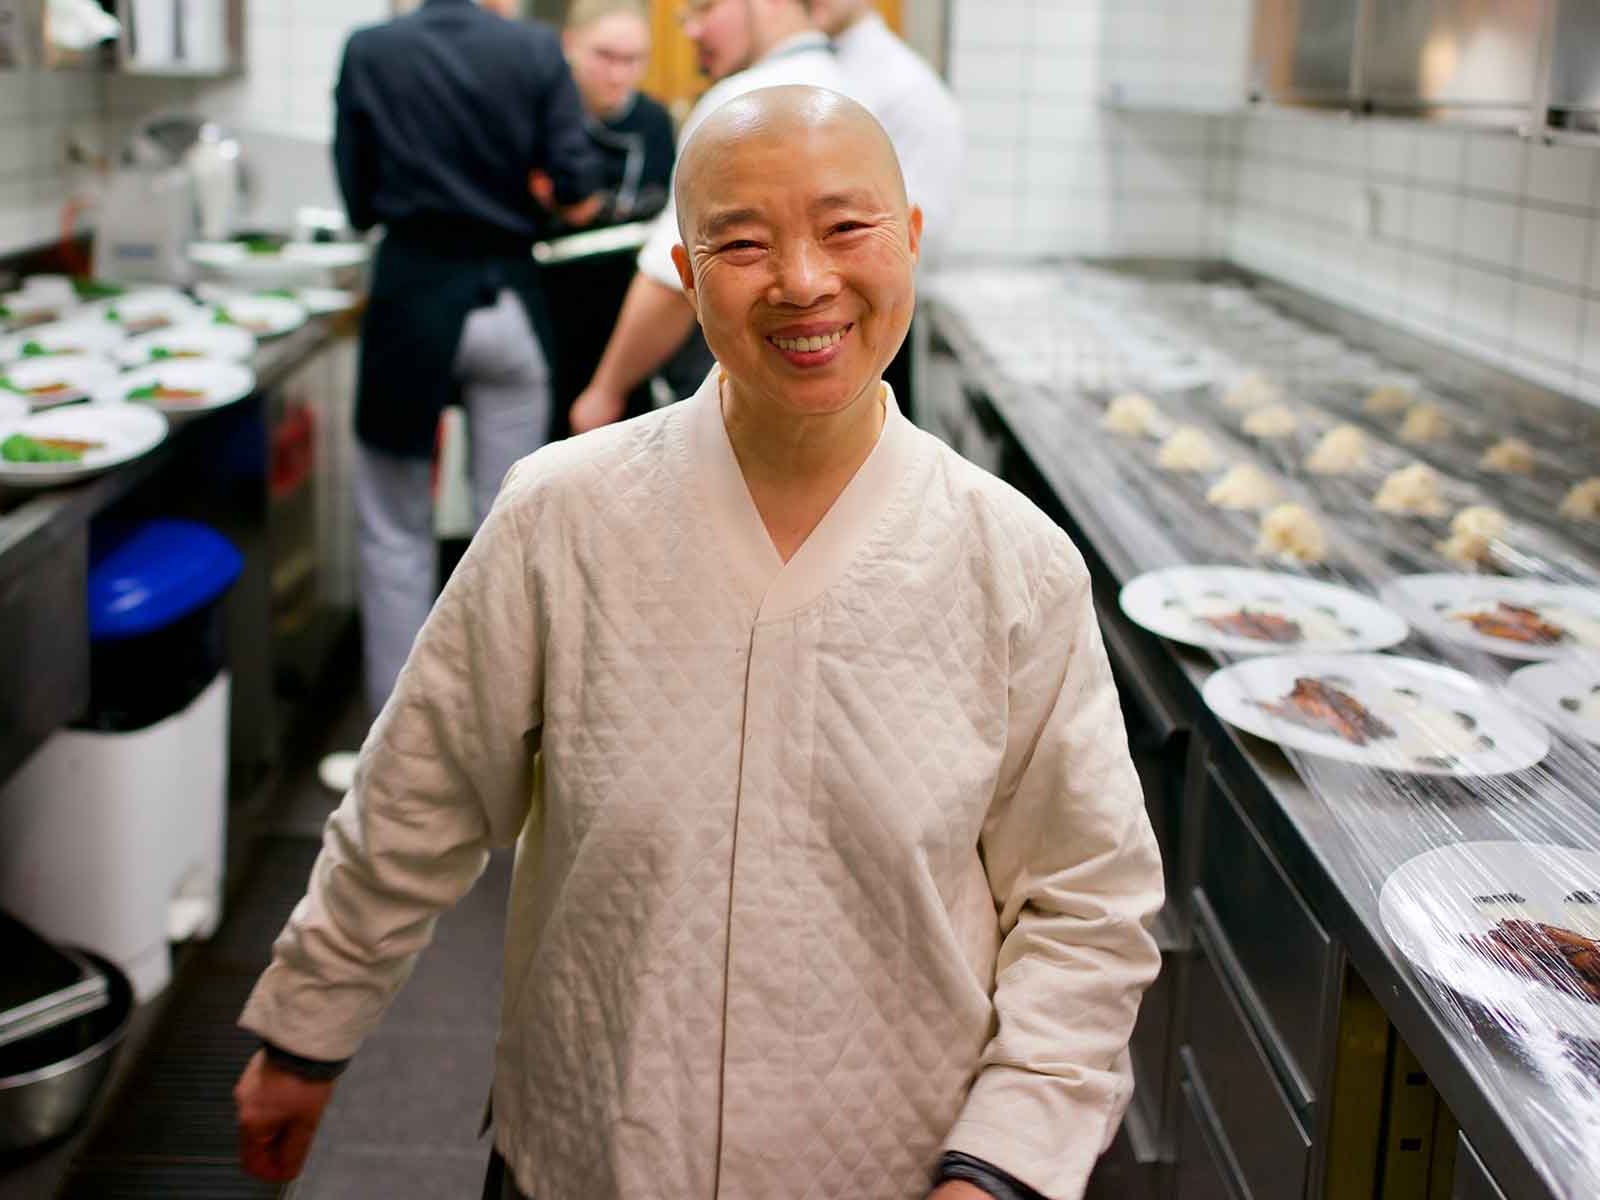 Jeong Kwan in der Küche des Basler «Teufelhofs»